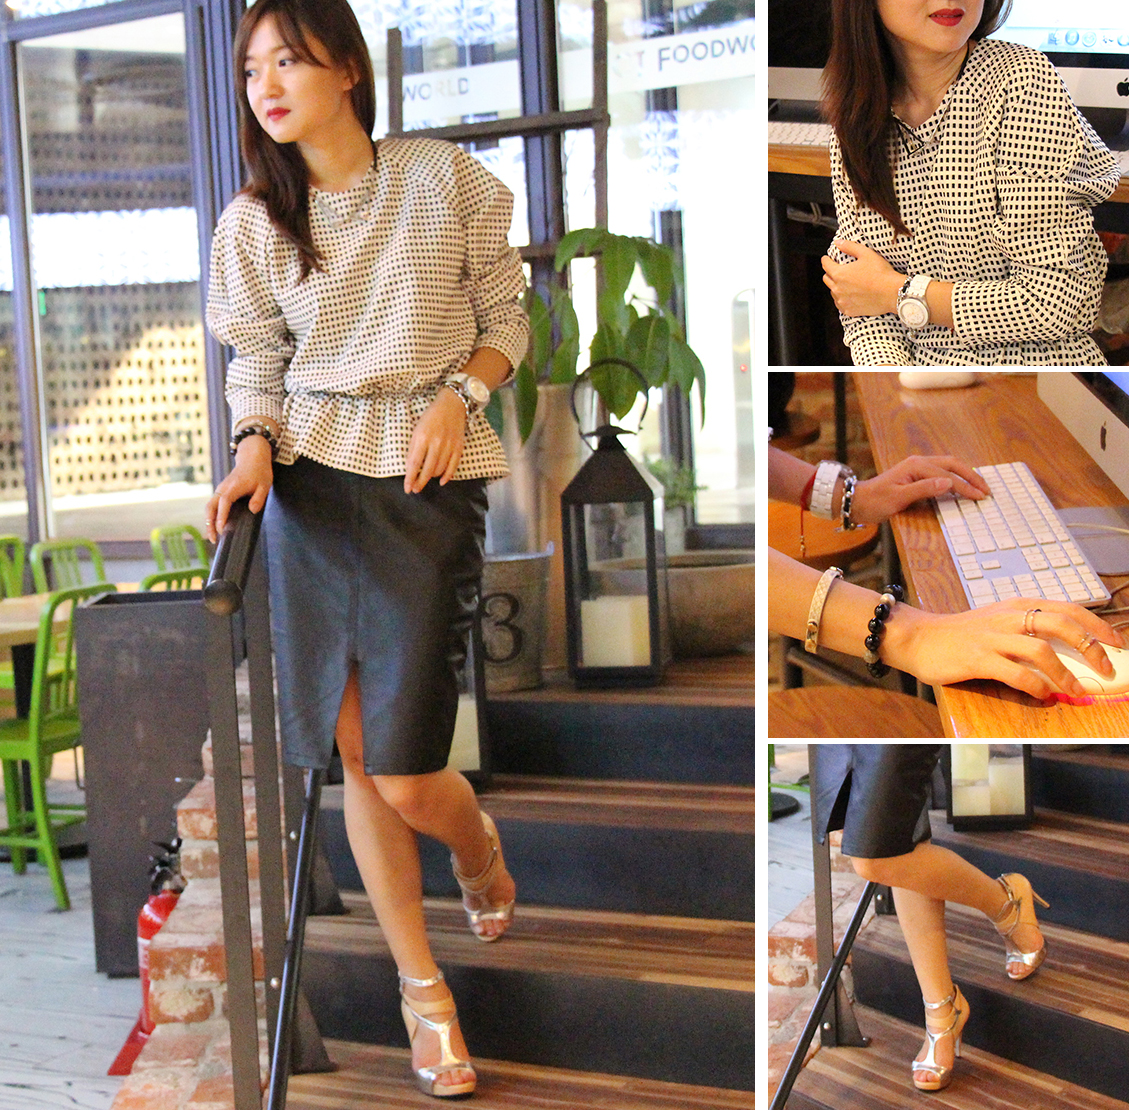 office look, skirt, seoul, fashionblogger, zoyaslookbook, пепелум, офисный стиль, мода, красота, новые фешн идеи